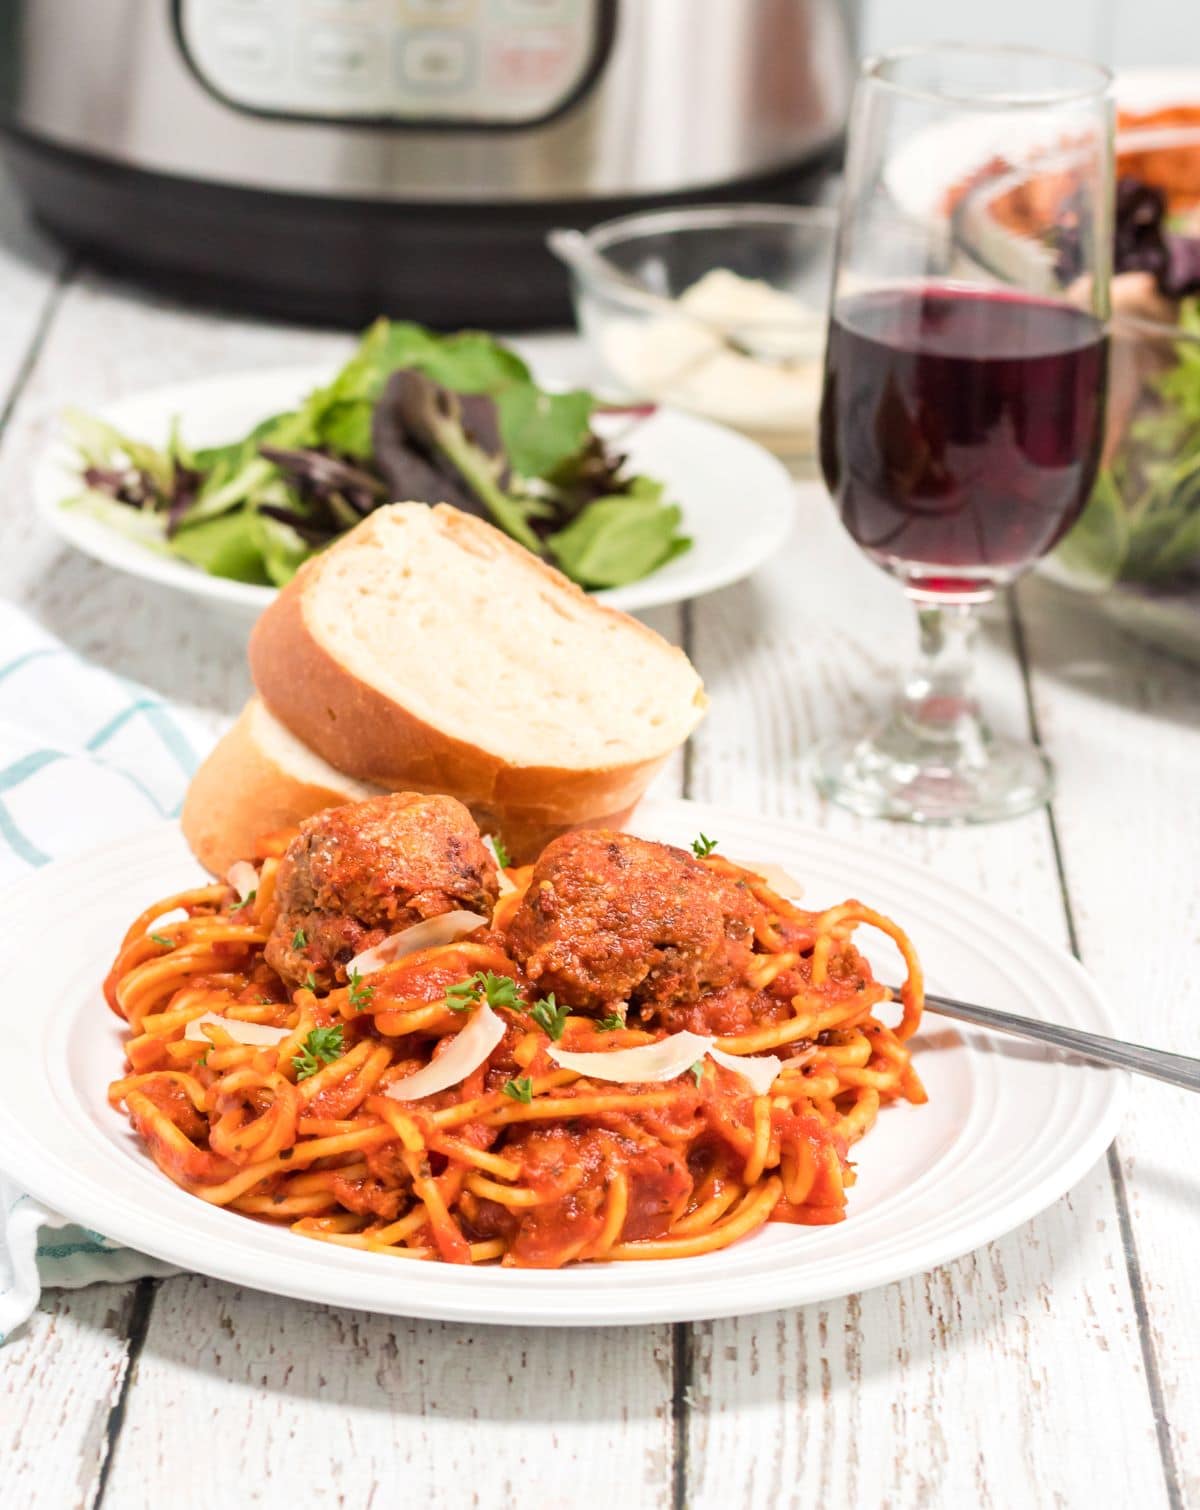 Homemade Spaghetti and Meatballs Recipe with a side of Italian bread.